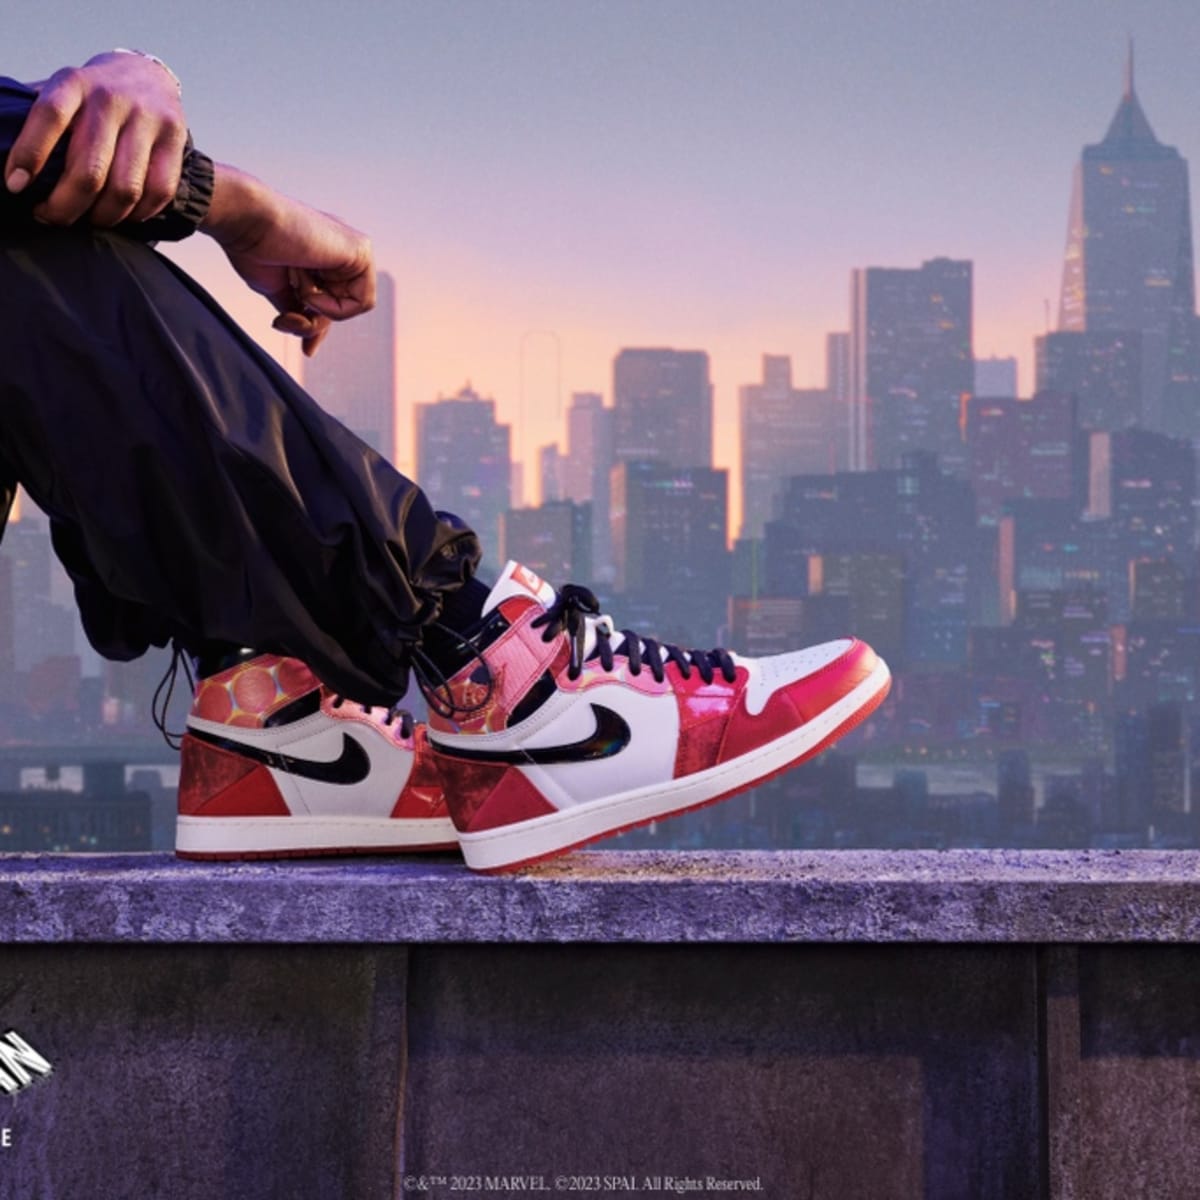 mundstykke Snestorm grundigt Less Than 73k Pairs of Air Jordan 1 'Next Chapter' Produced - Sports  Illustrated FanNation Kicks News, Analysis and More